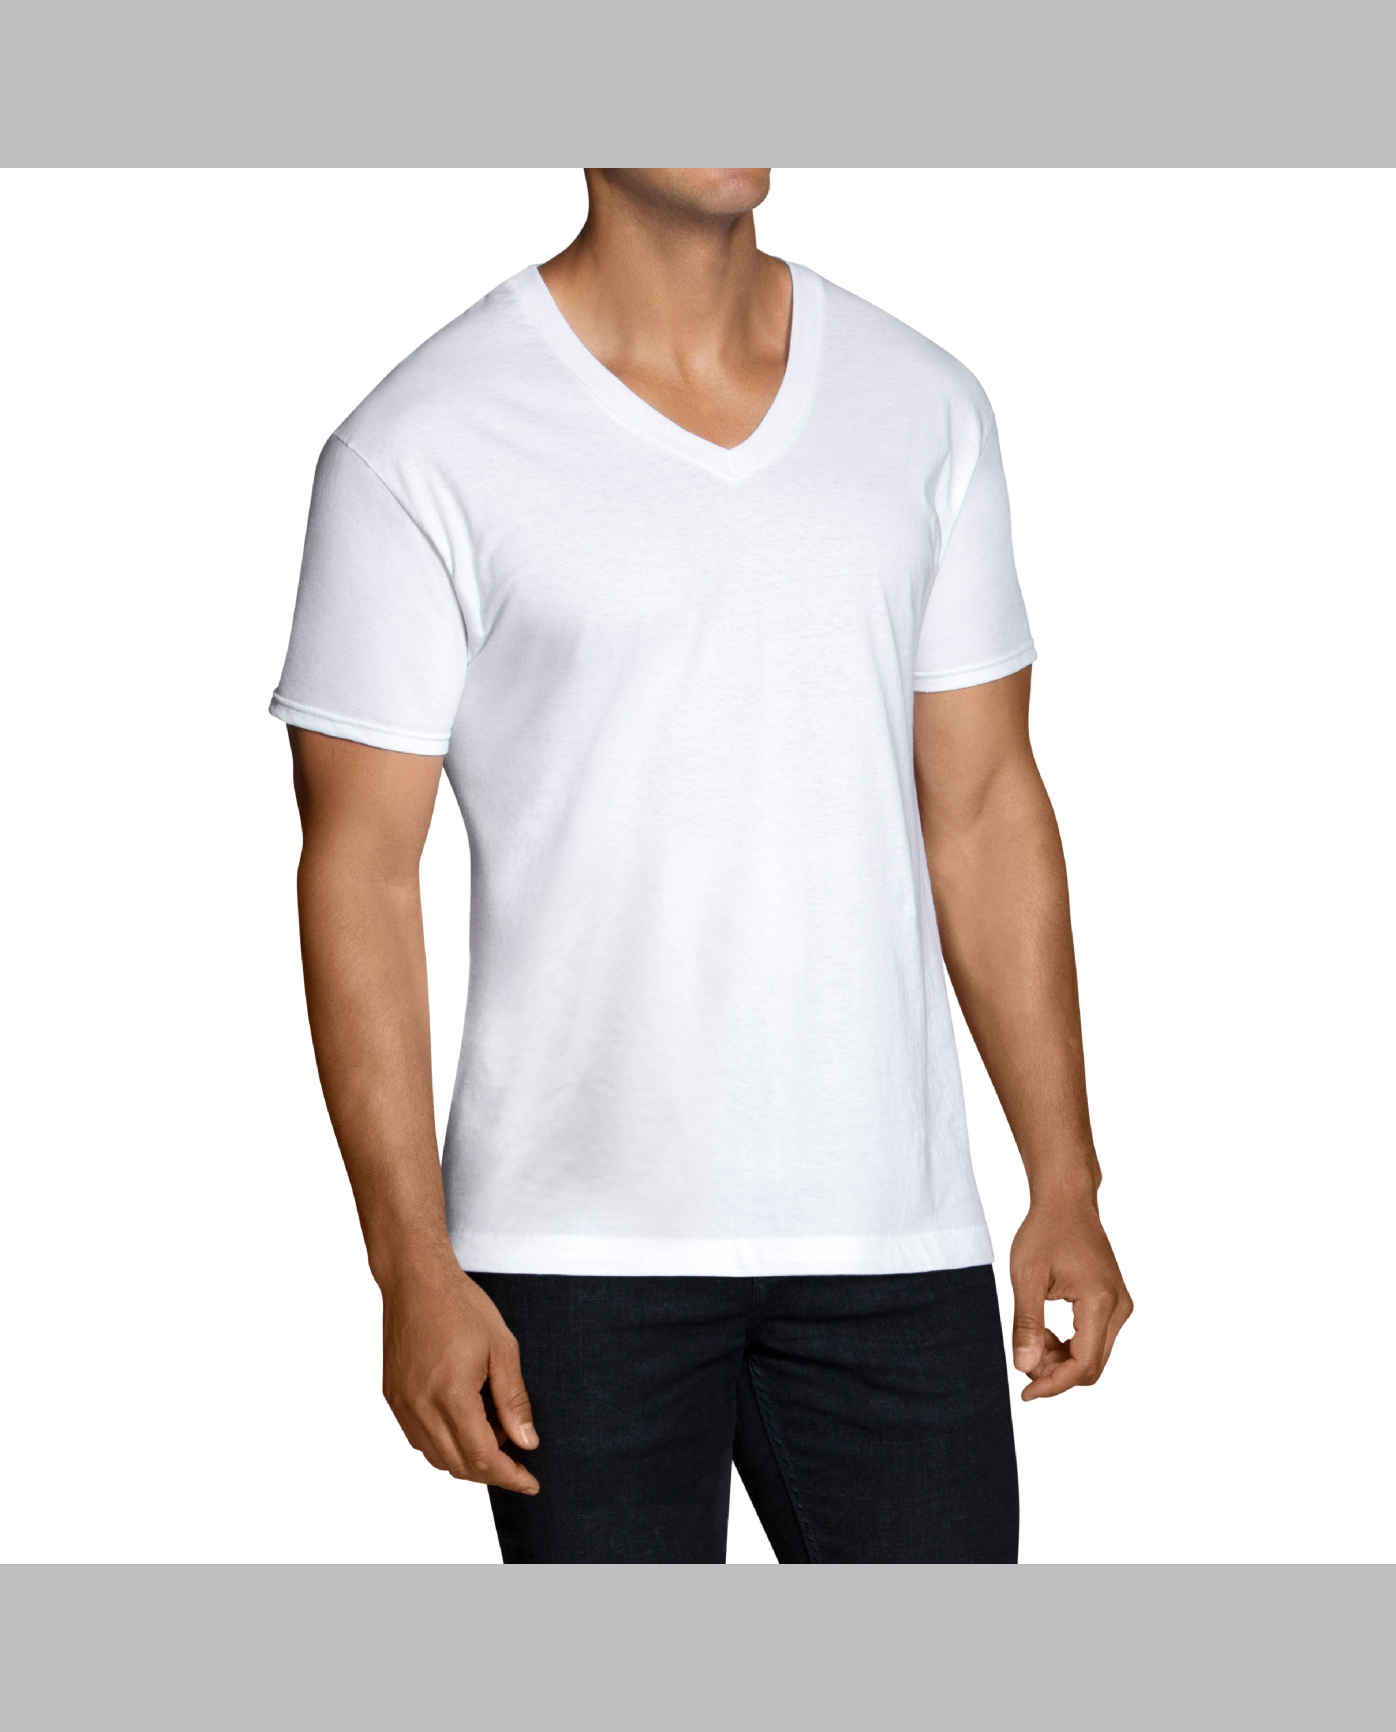 Men's Dual Defense White V-Neck T-Shirts, 3 Pack - Fruit US